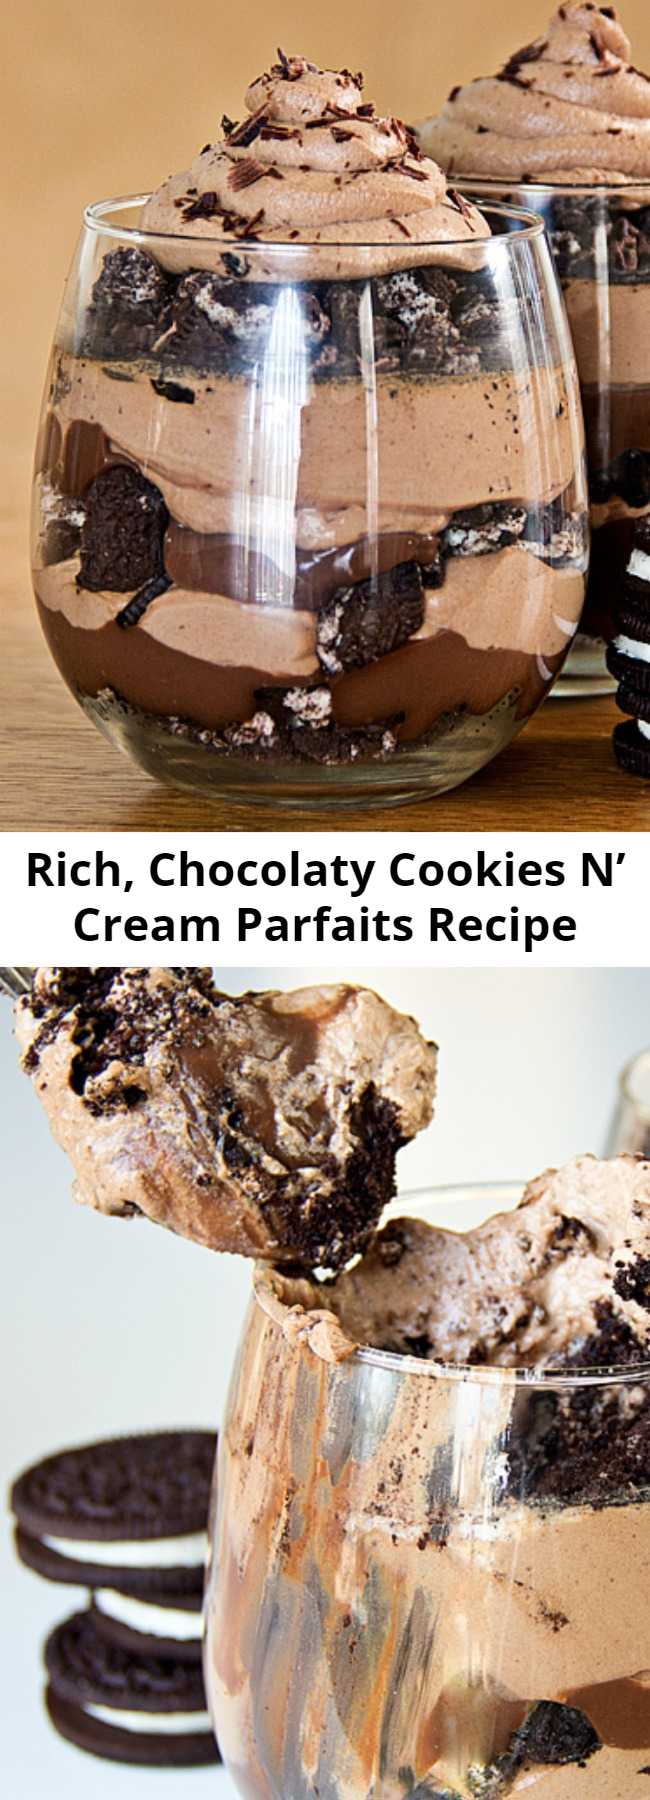 Rich, Chocolaty Cookies N’ Cream Parfaits Recipe